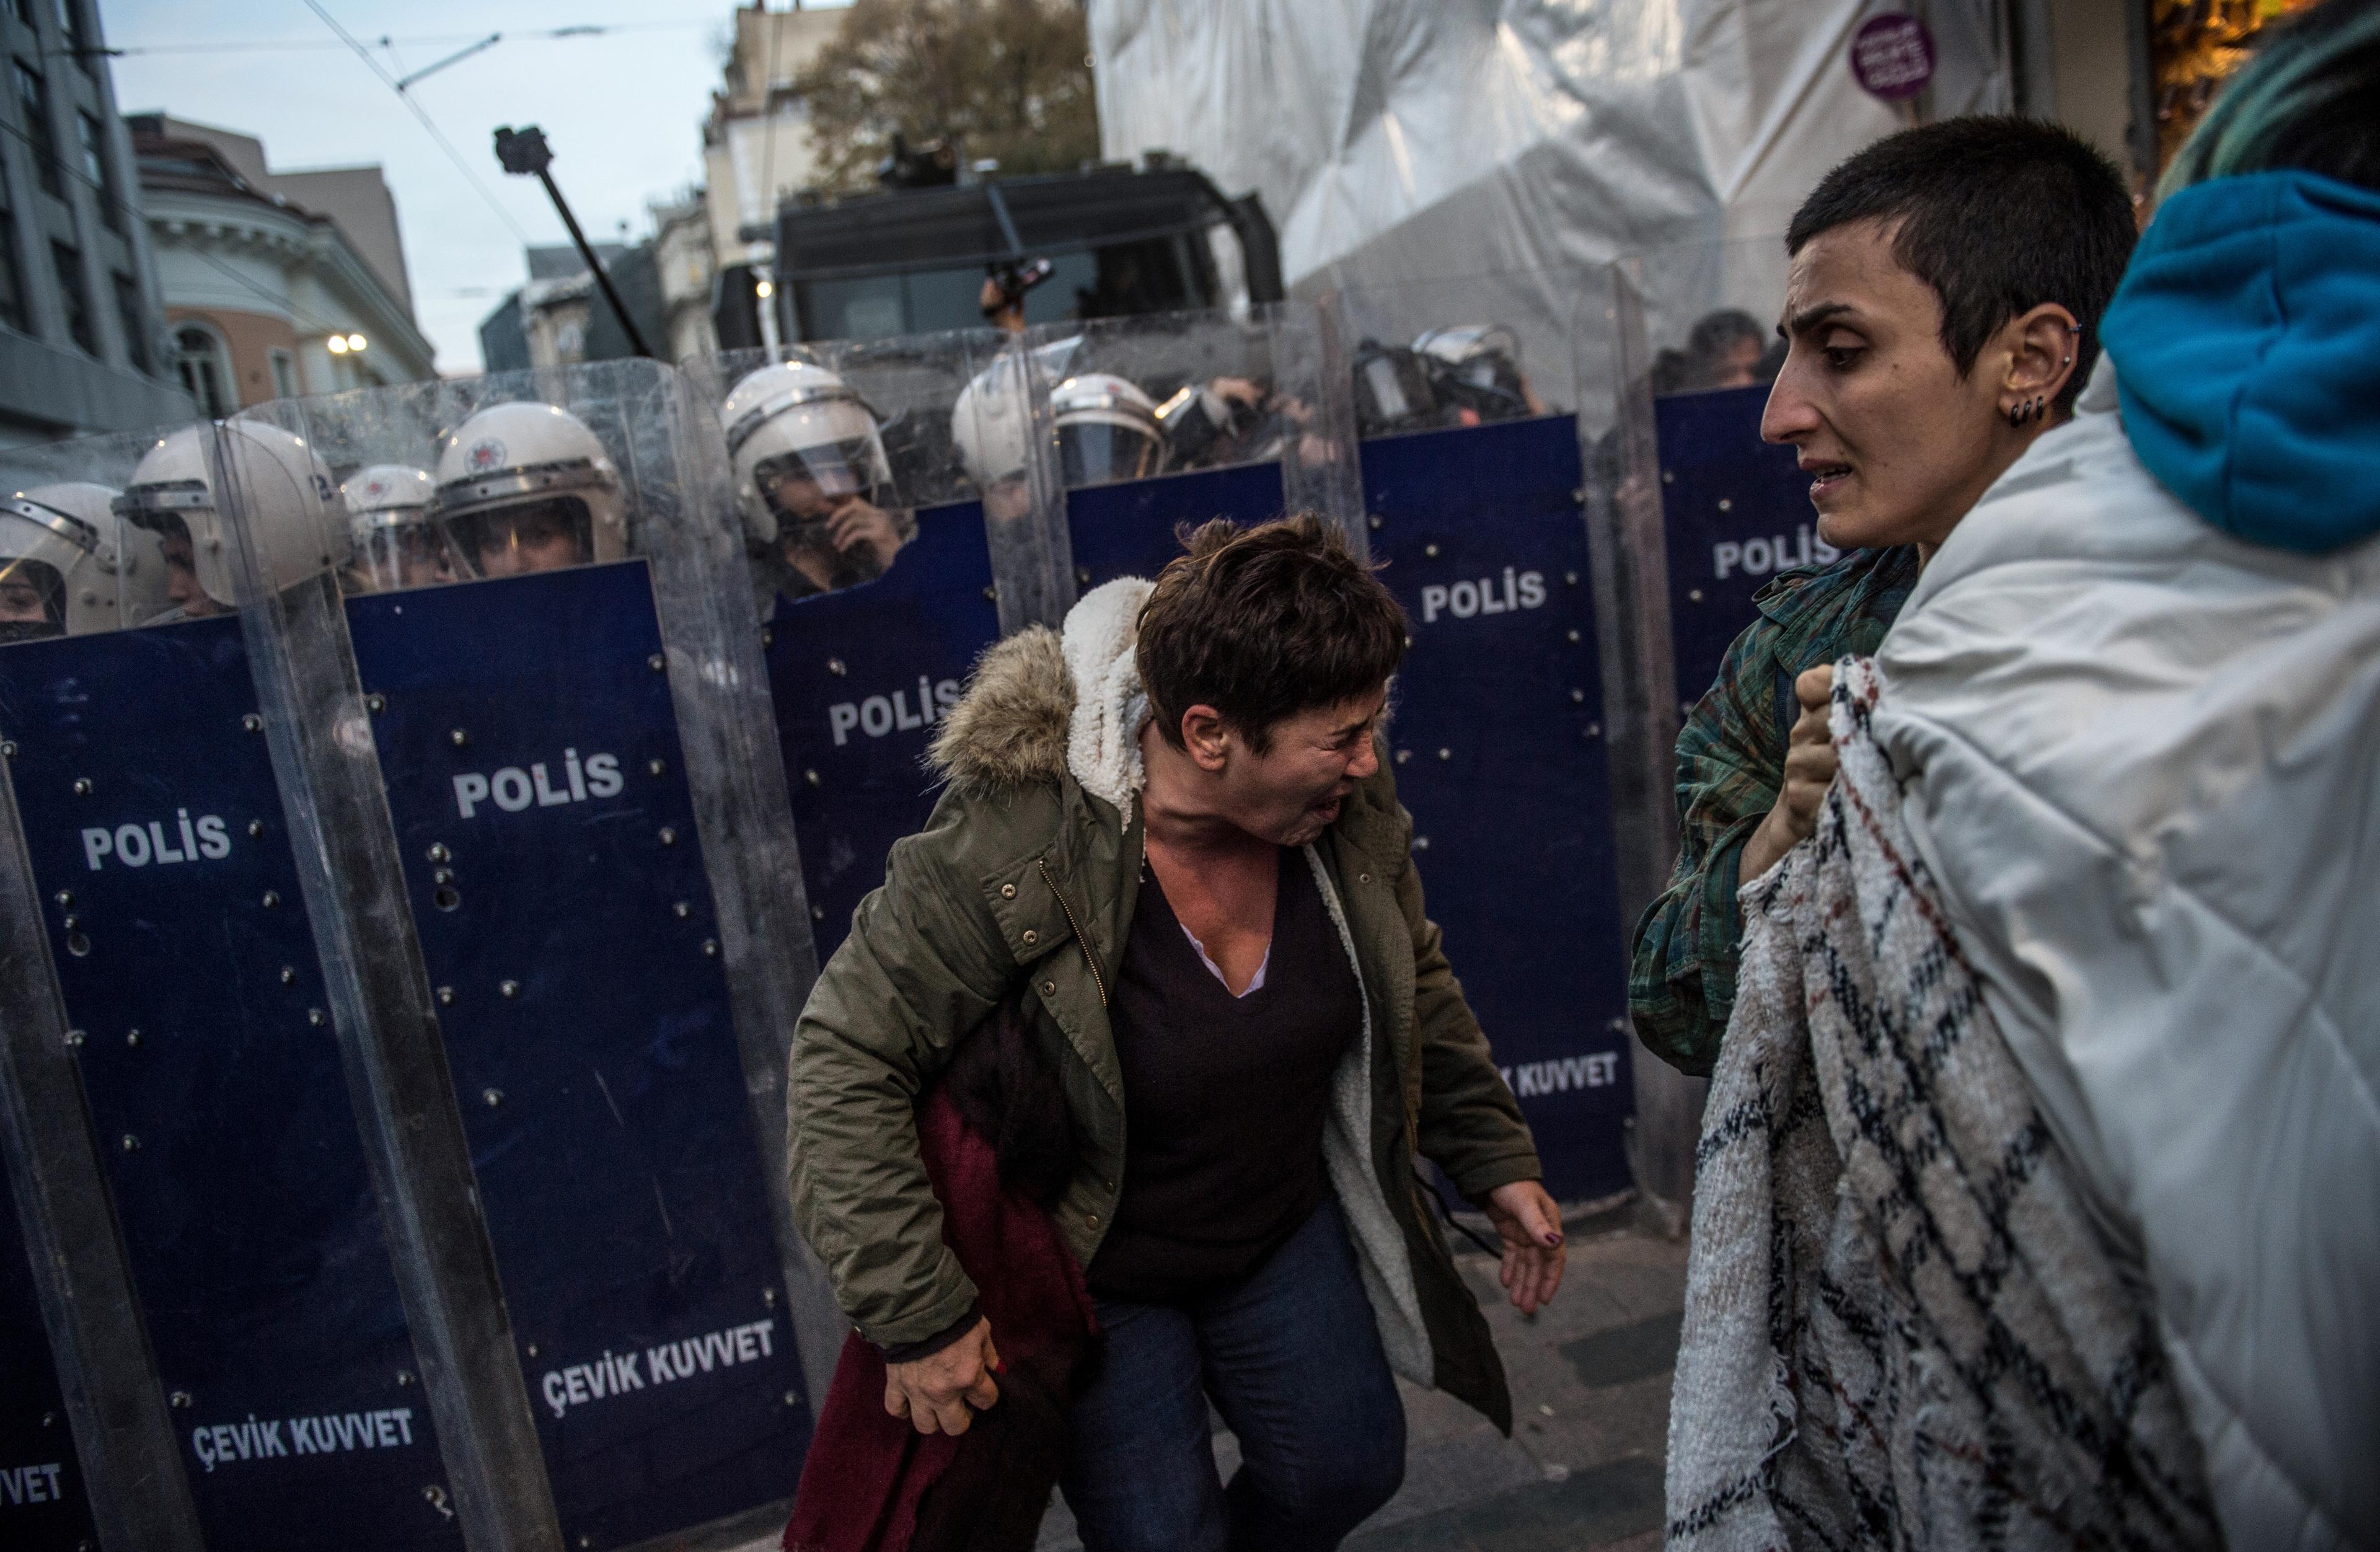 Turska policija suzavcima napala sudionike marša protiv nasilja nad ženama